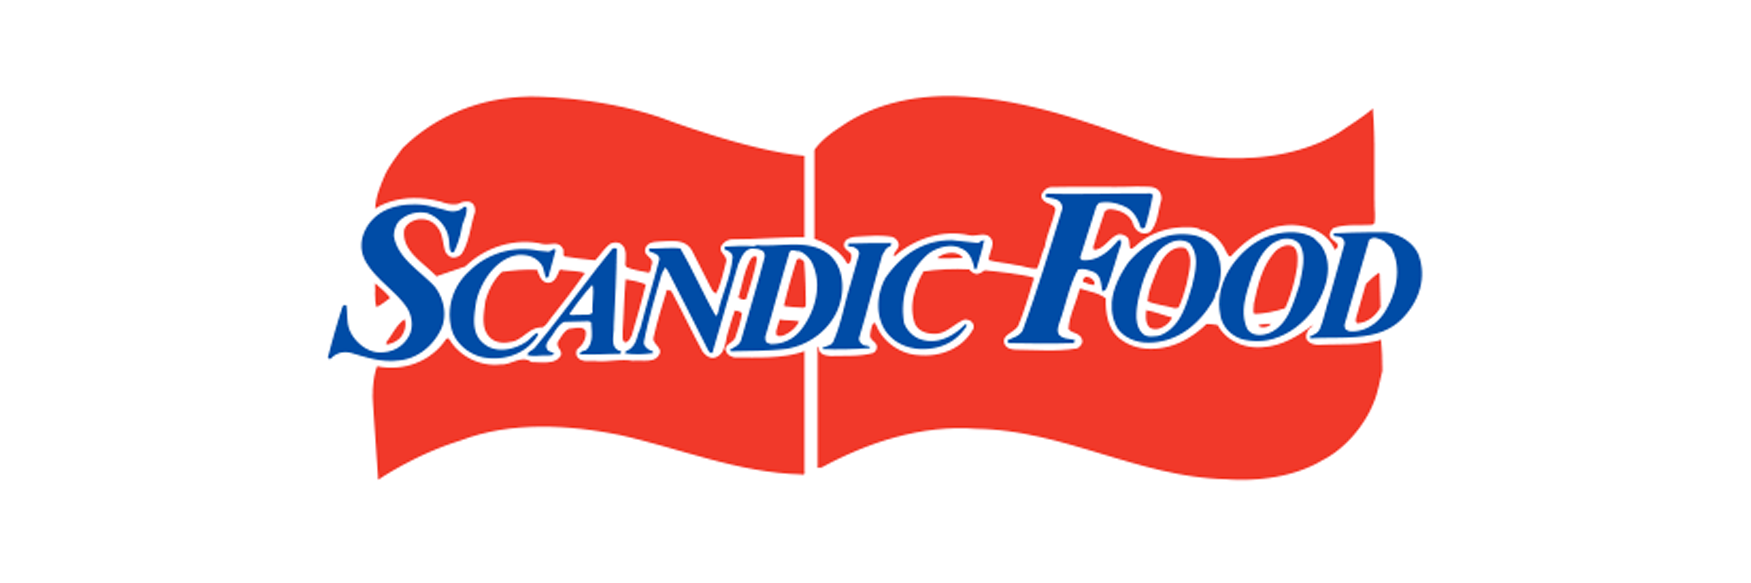 Scandic Food